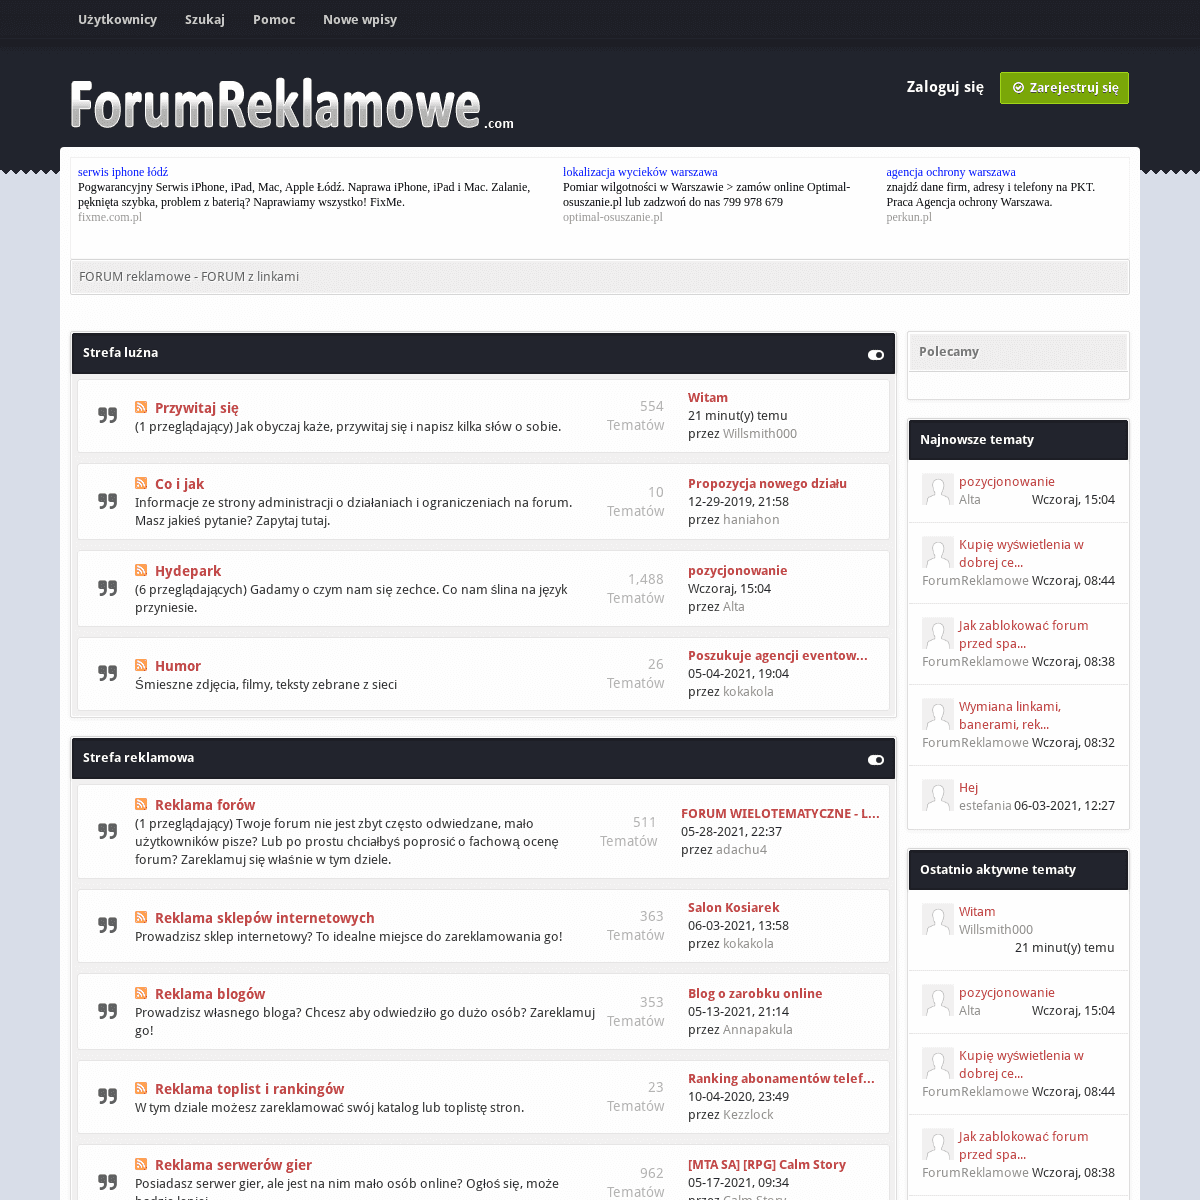 A complete backup of https://forumreklamowe.com